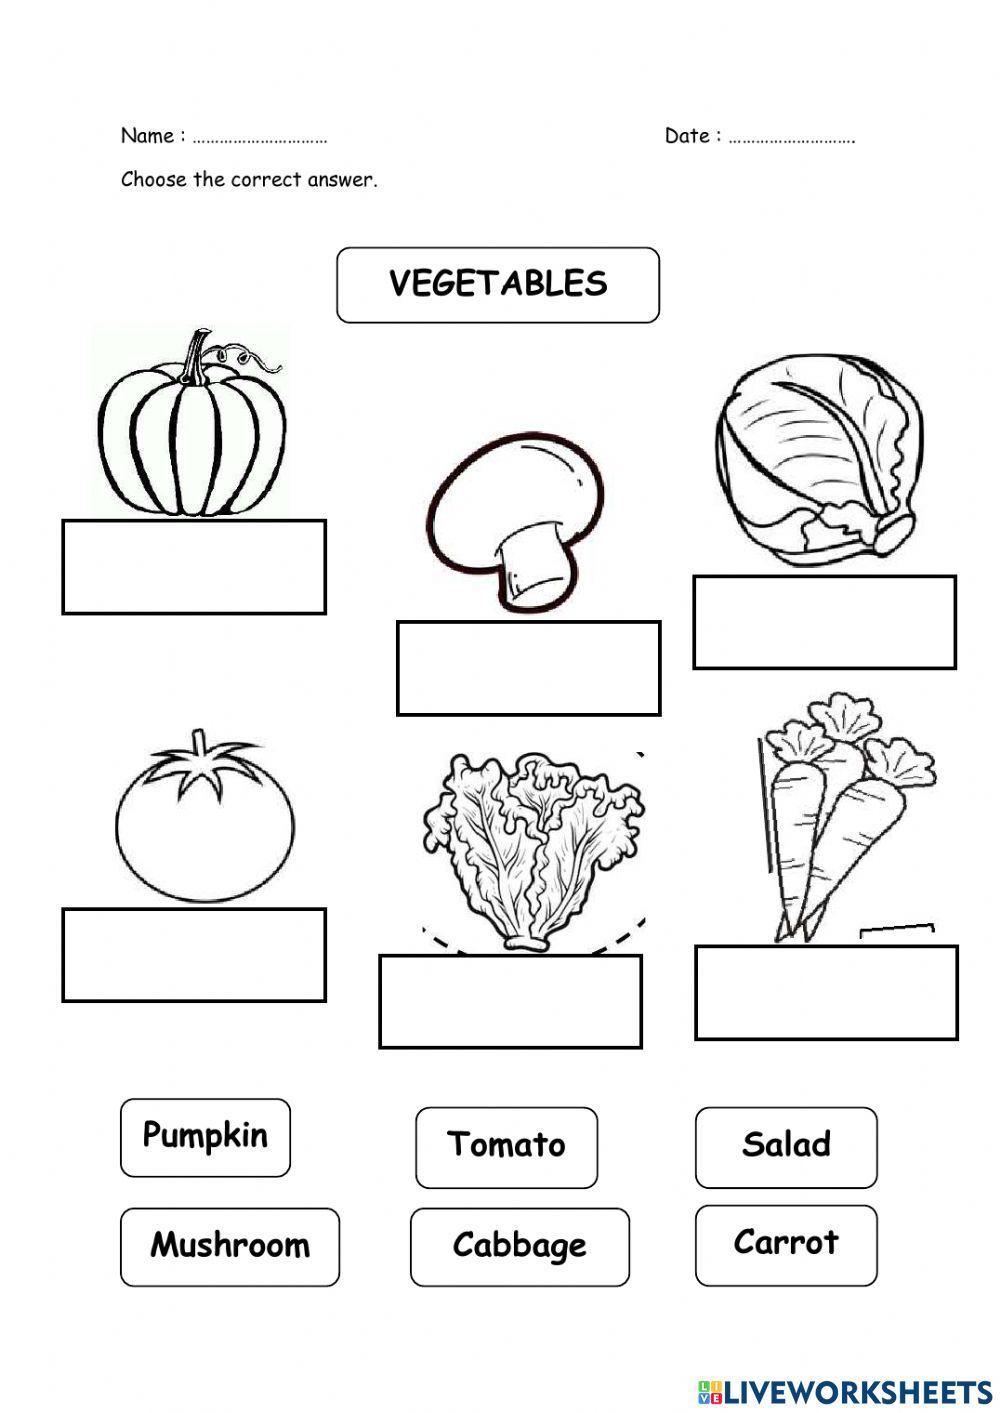 Vegetables name